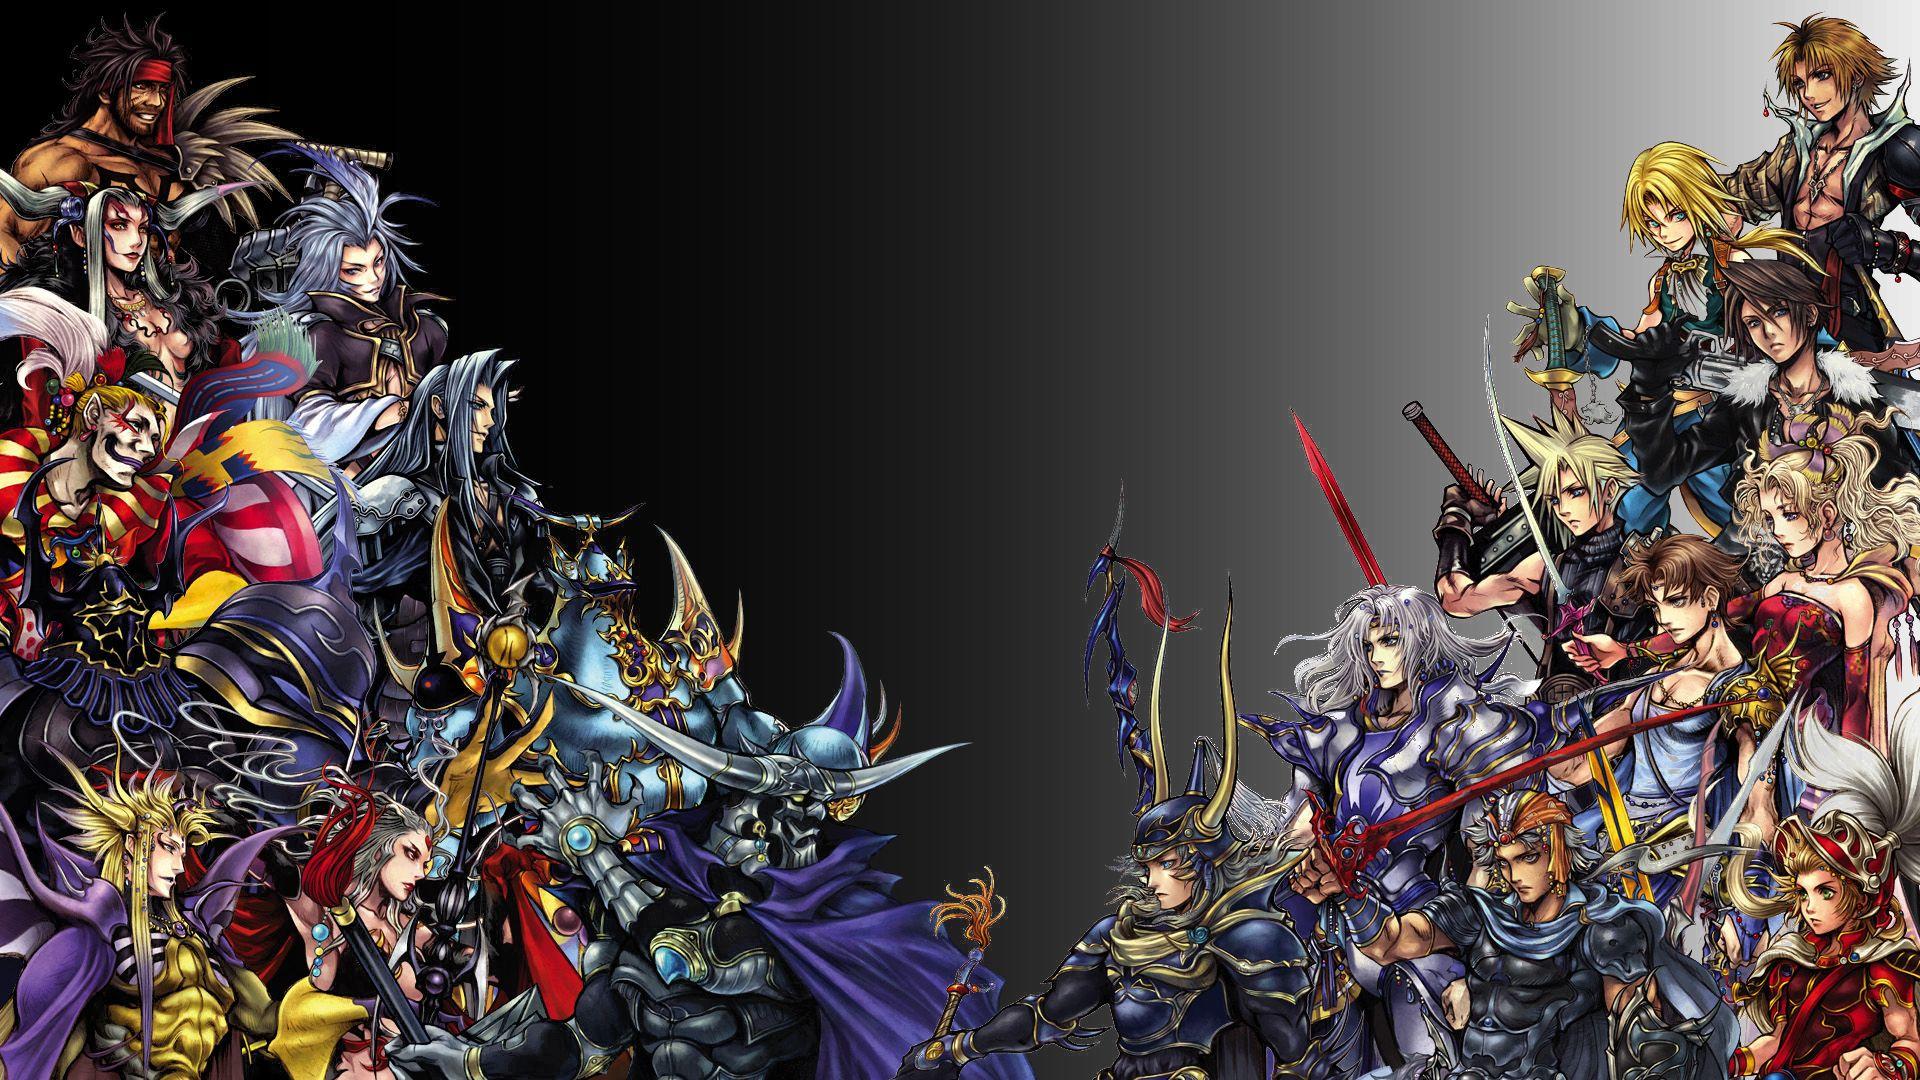 100% Quality HD Final Fantasy Image, Wallpaper for Desktop